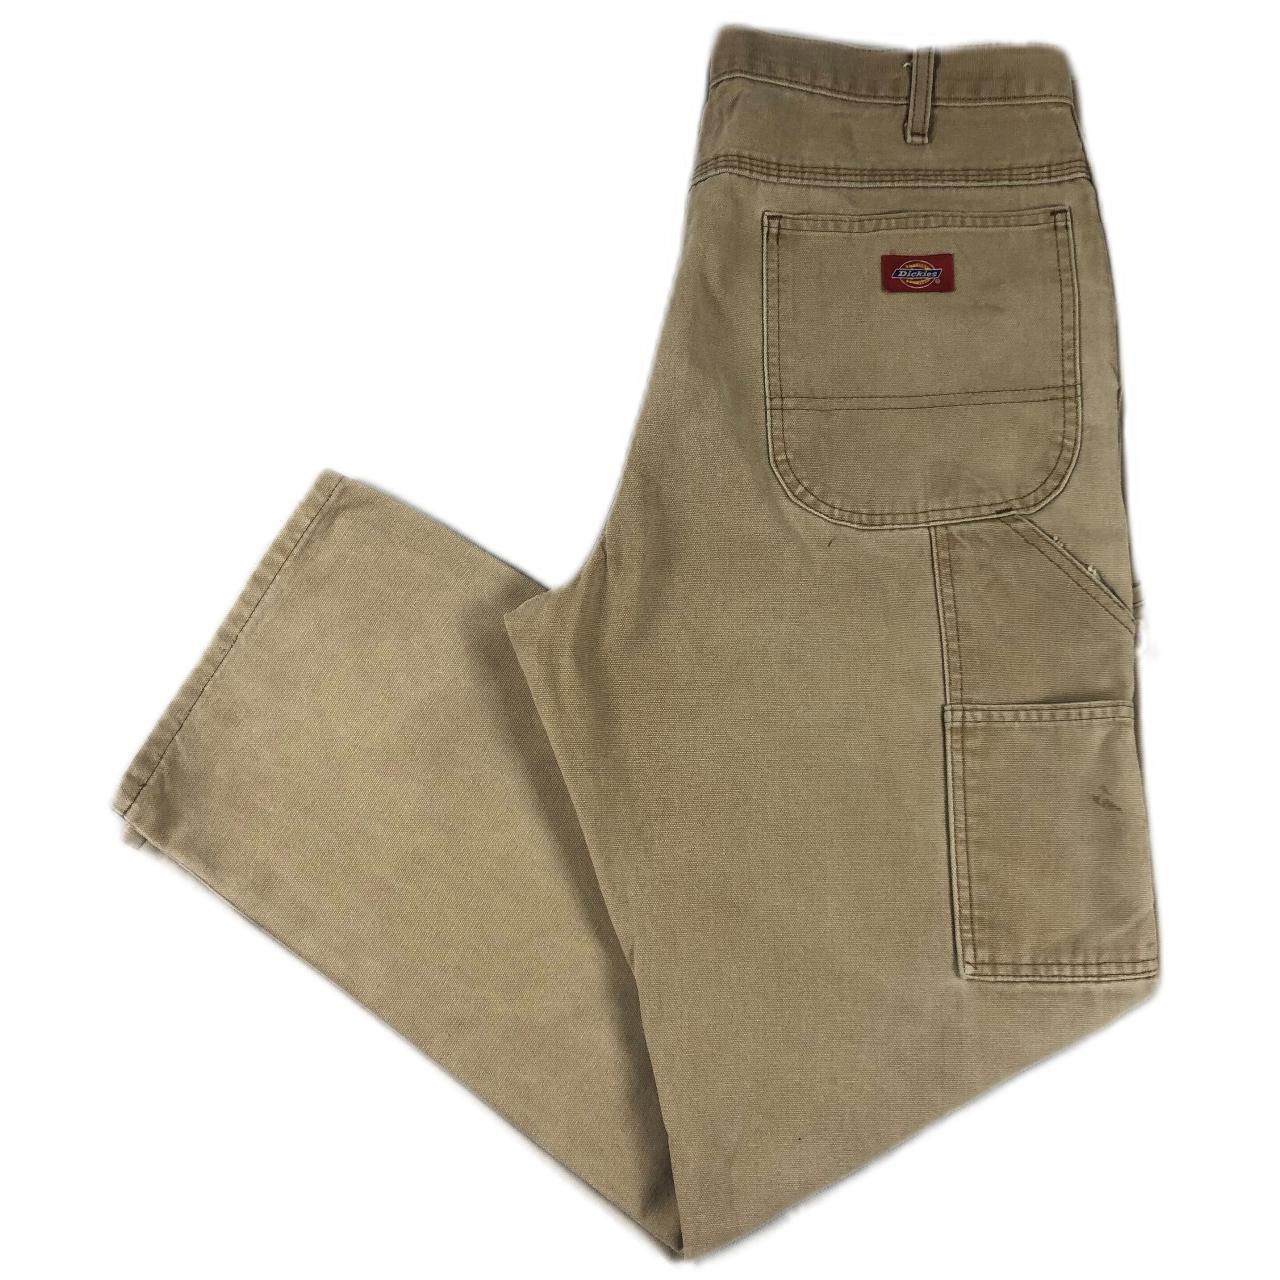 Vintage Dickies Khaki Carpenter Trousers Jeans This... - Depop